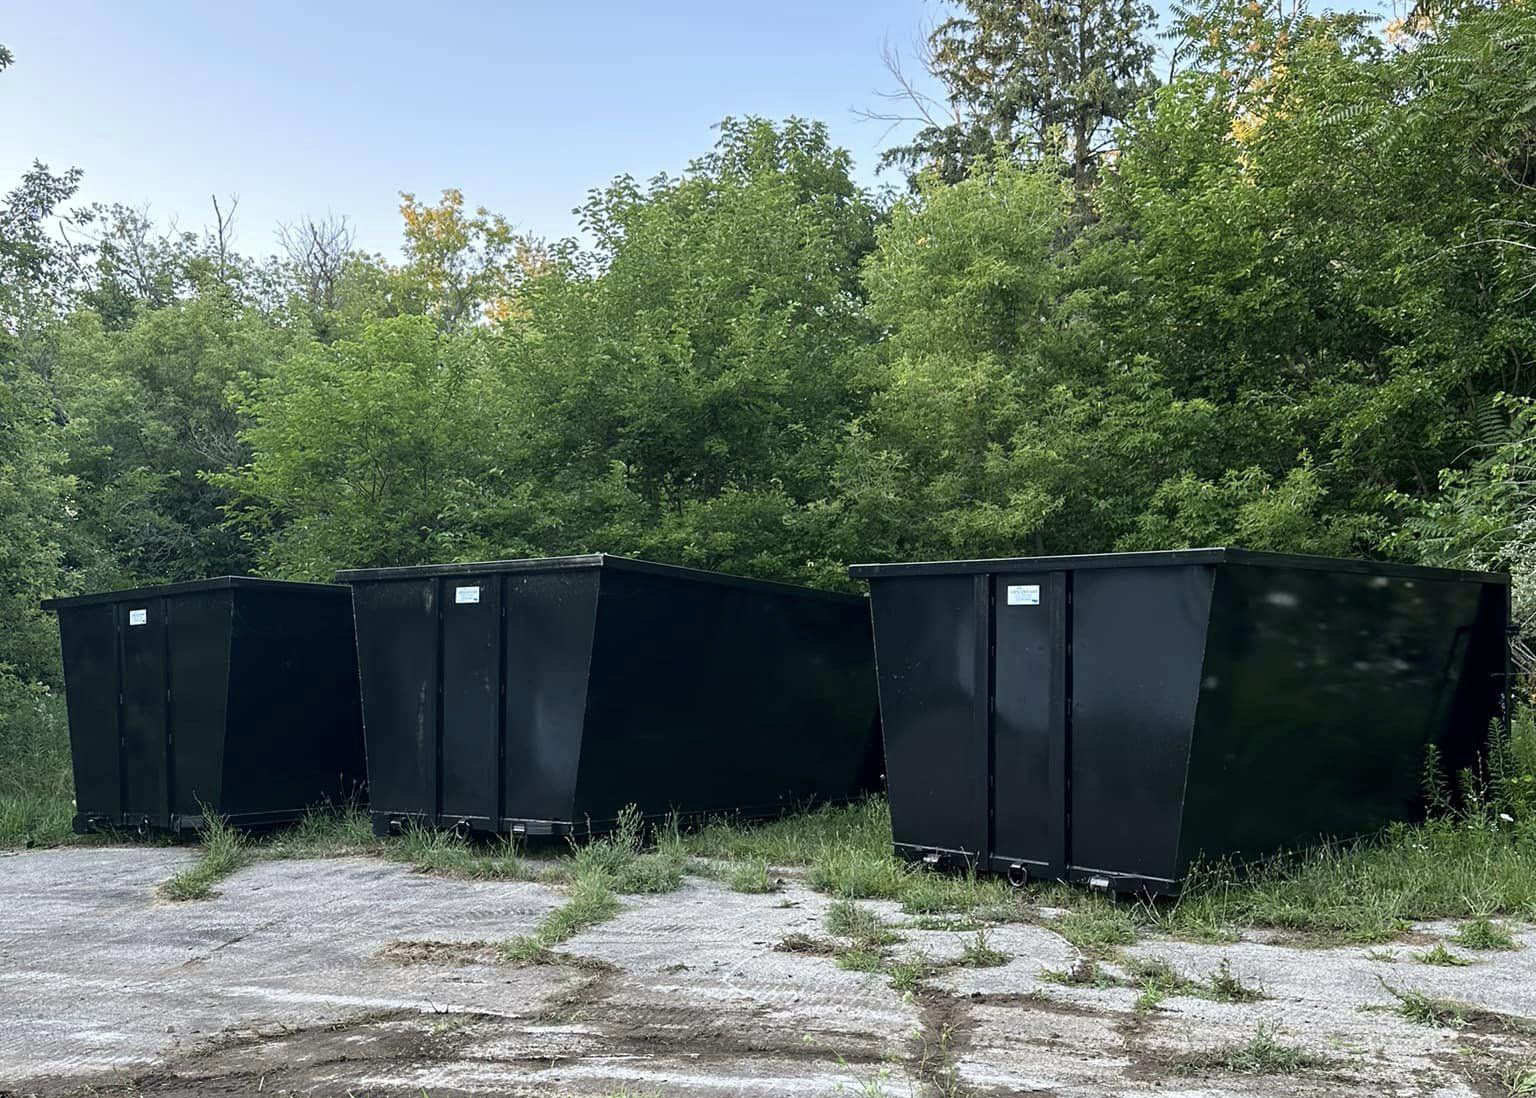 21-yard dumpsters